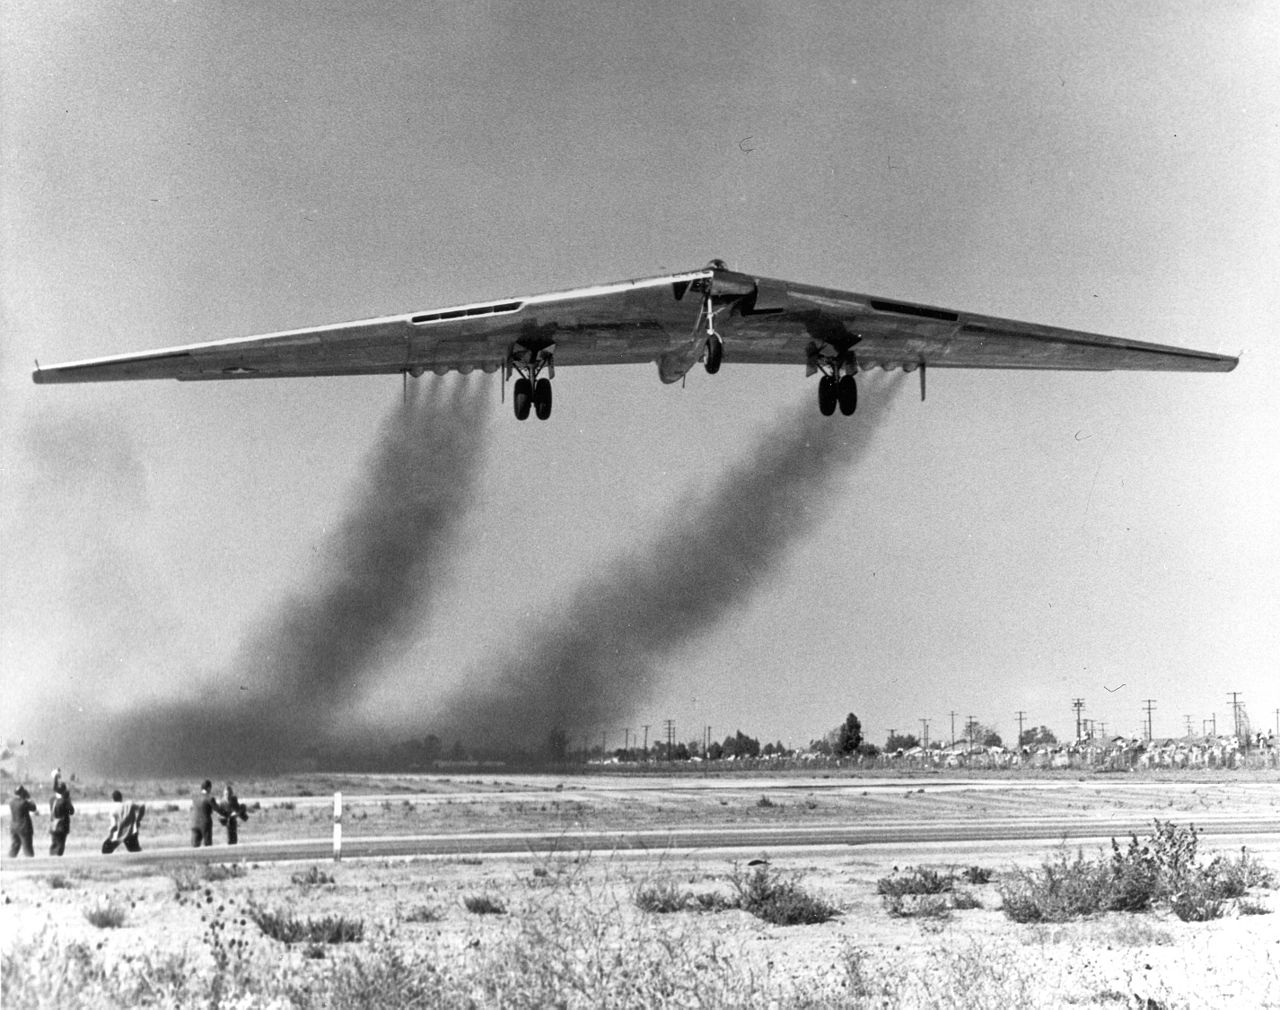 YB-49 takes to the sky